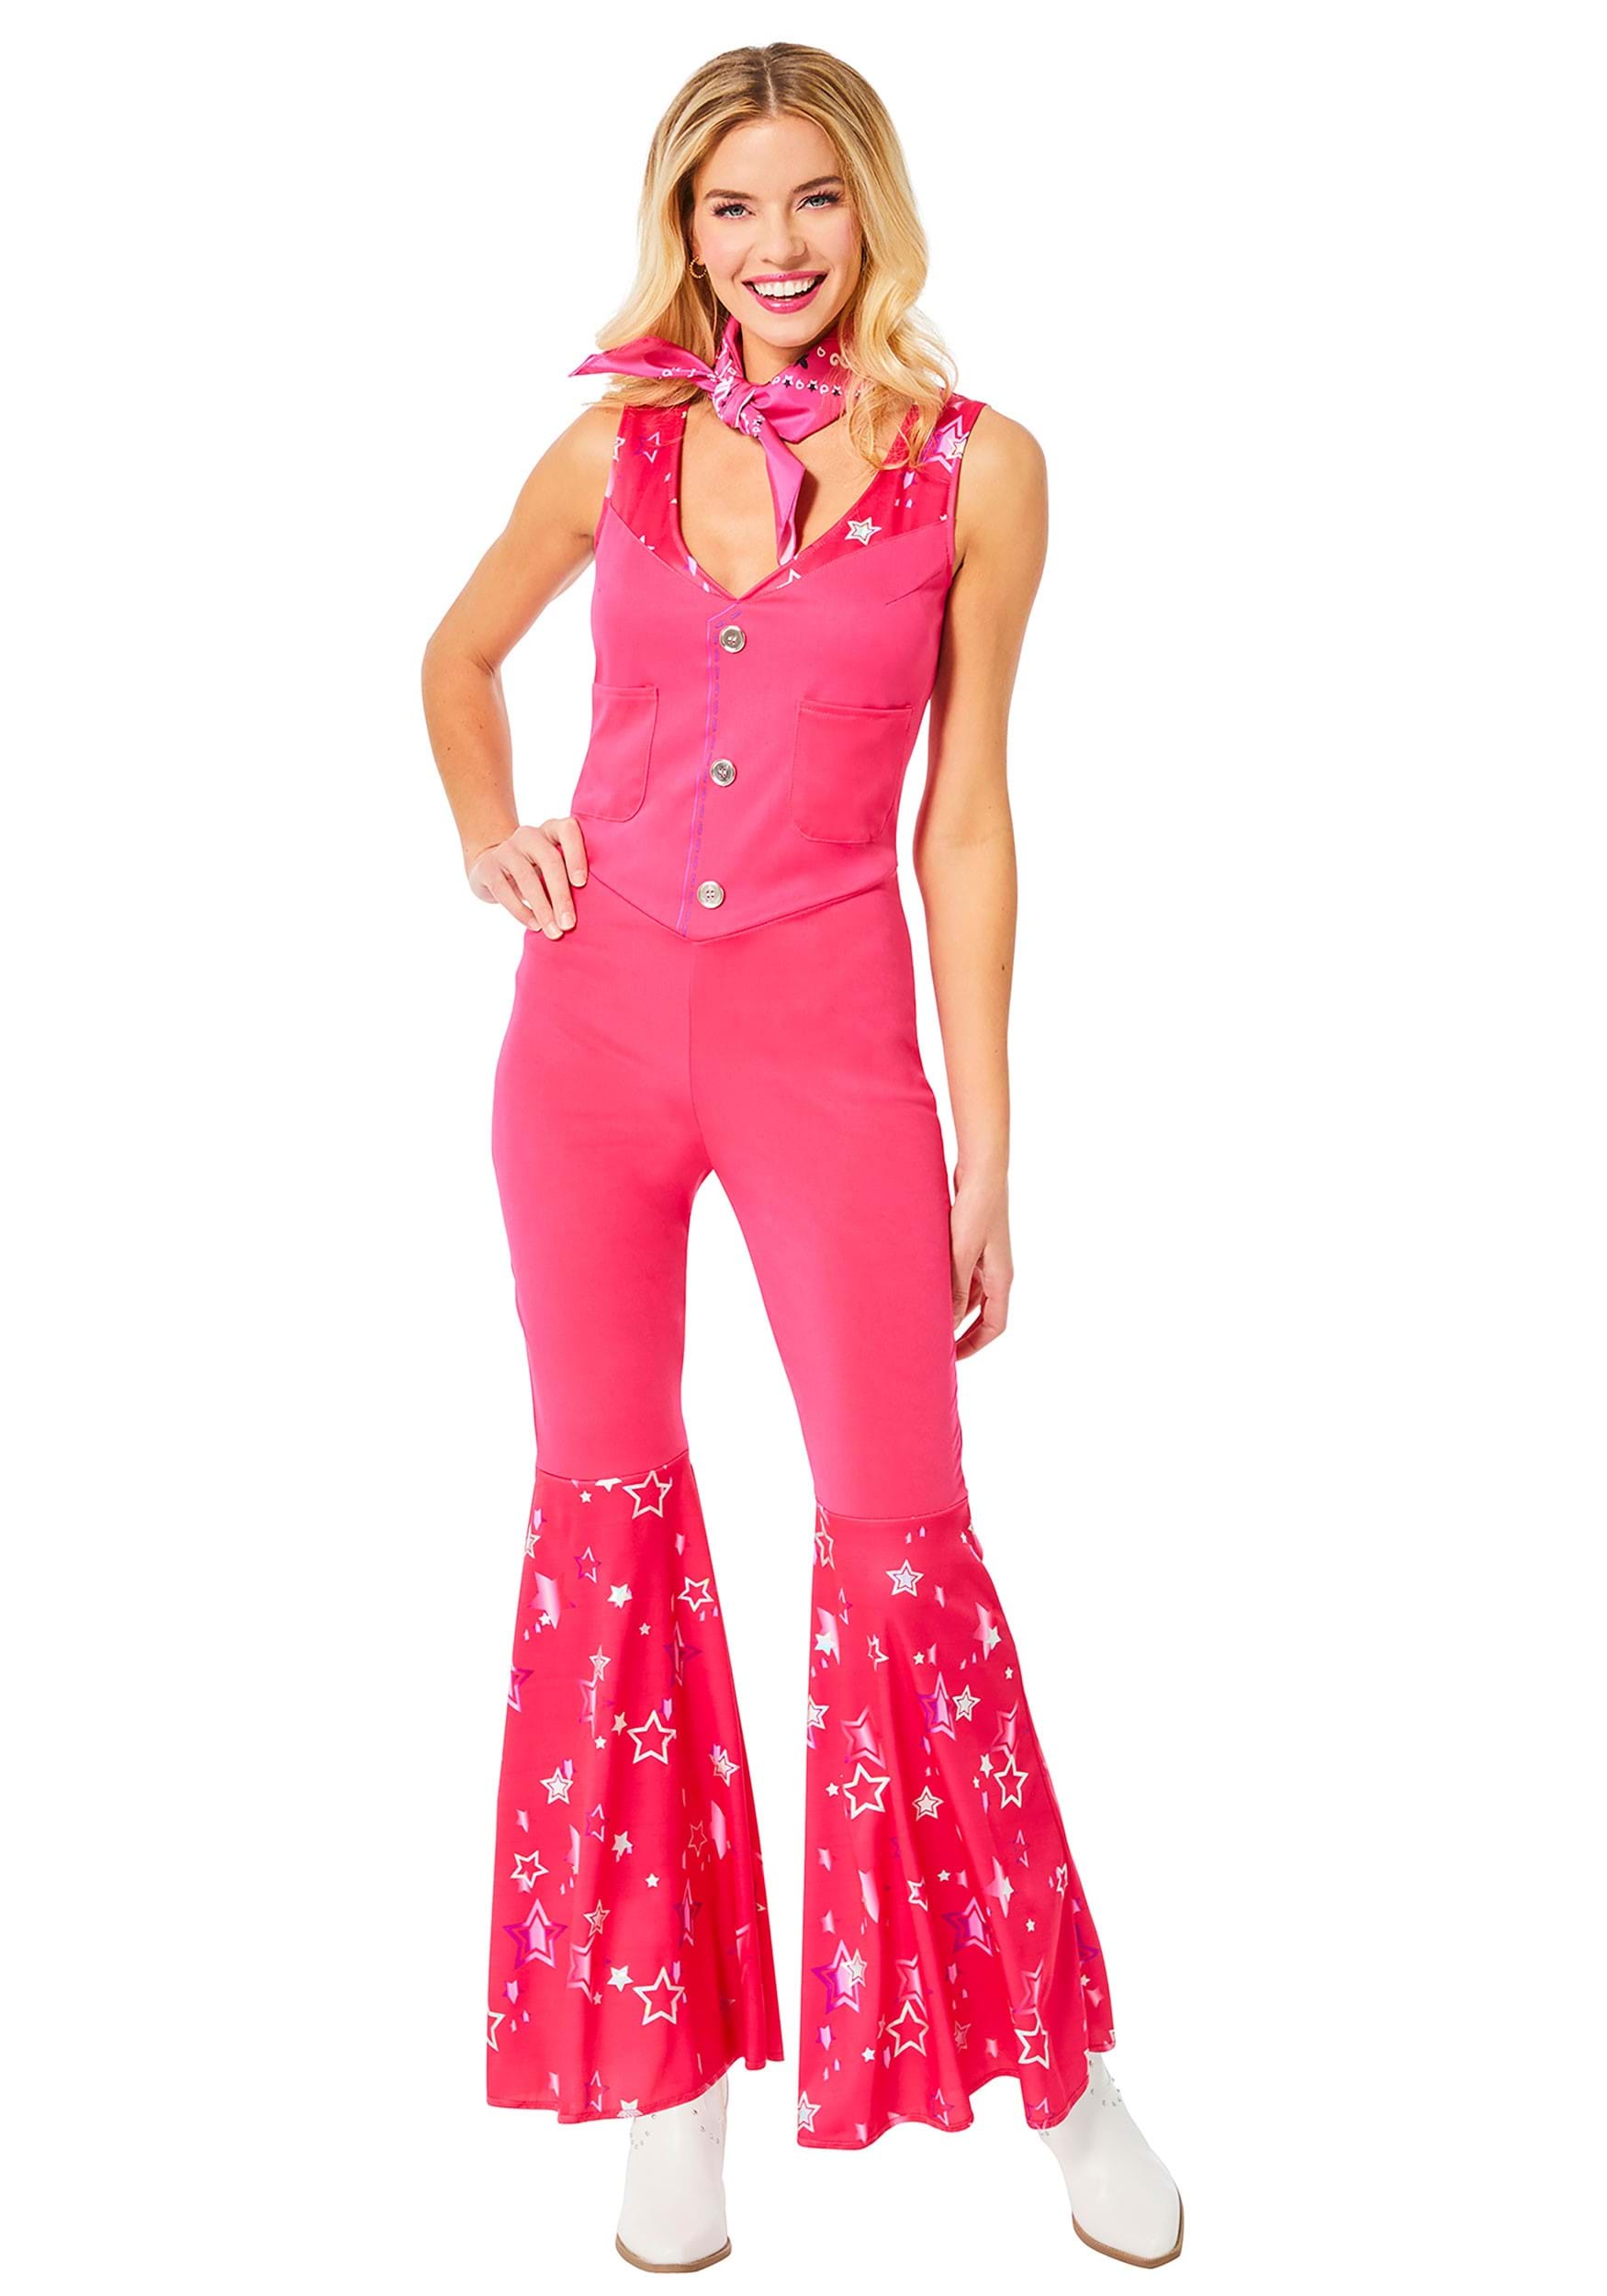 Women's Barbie Movie Cowgirl Costume | Barbie Costumes